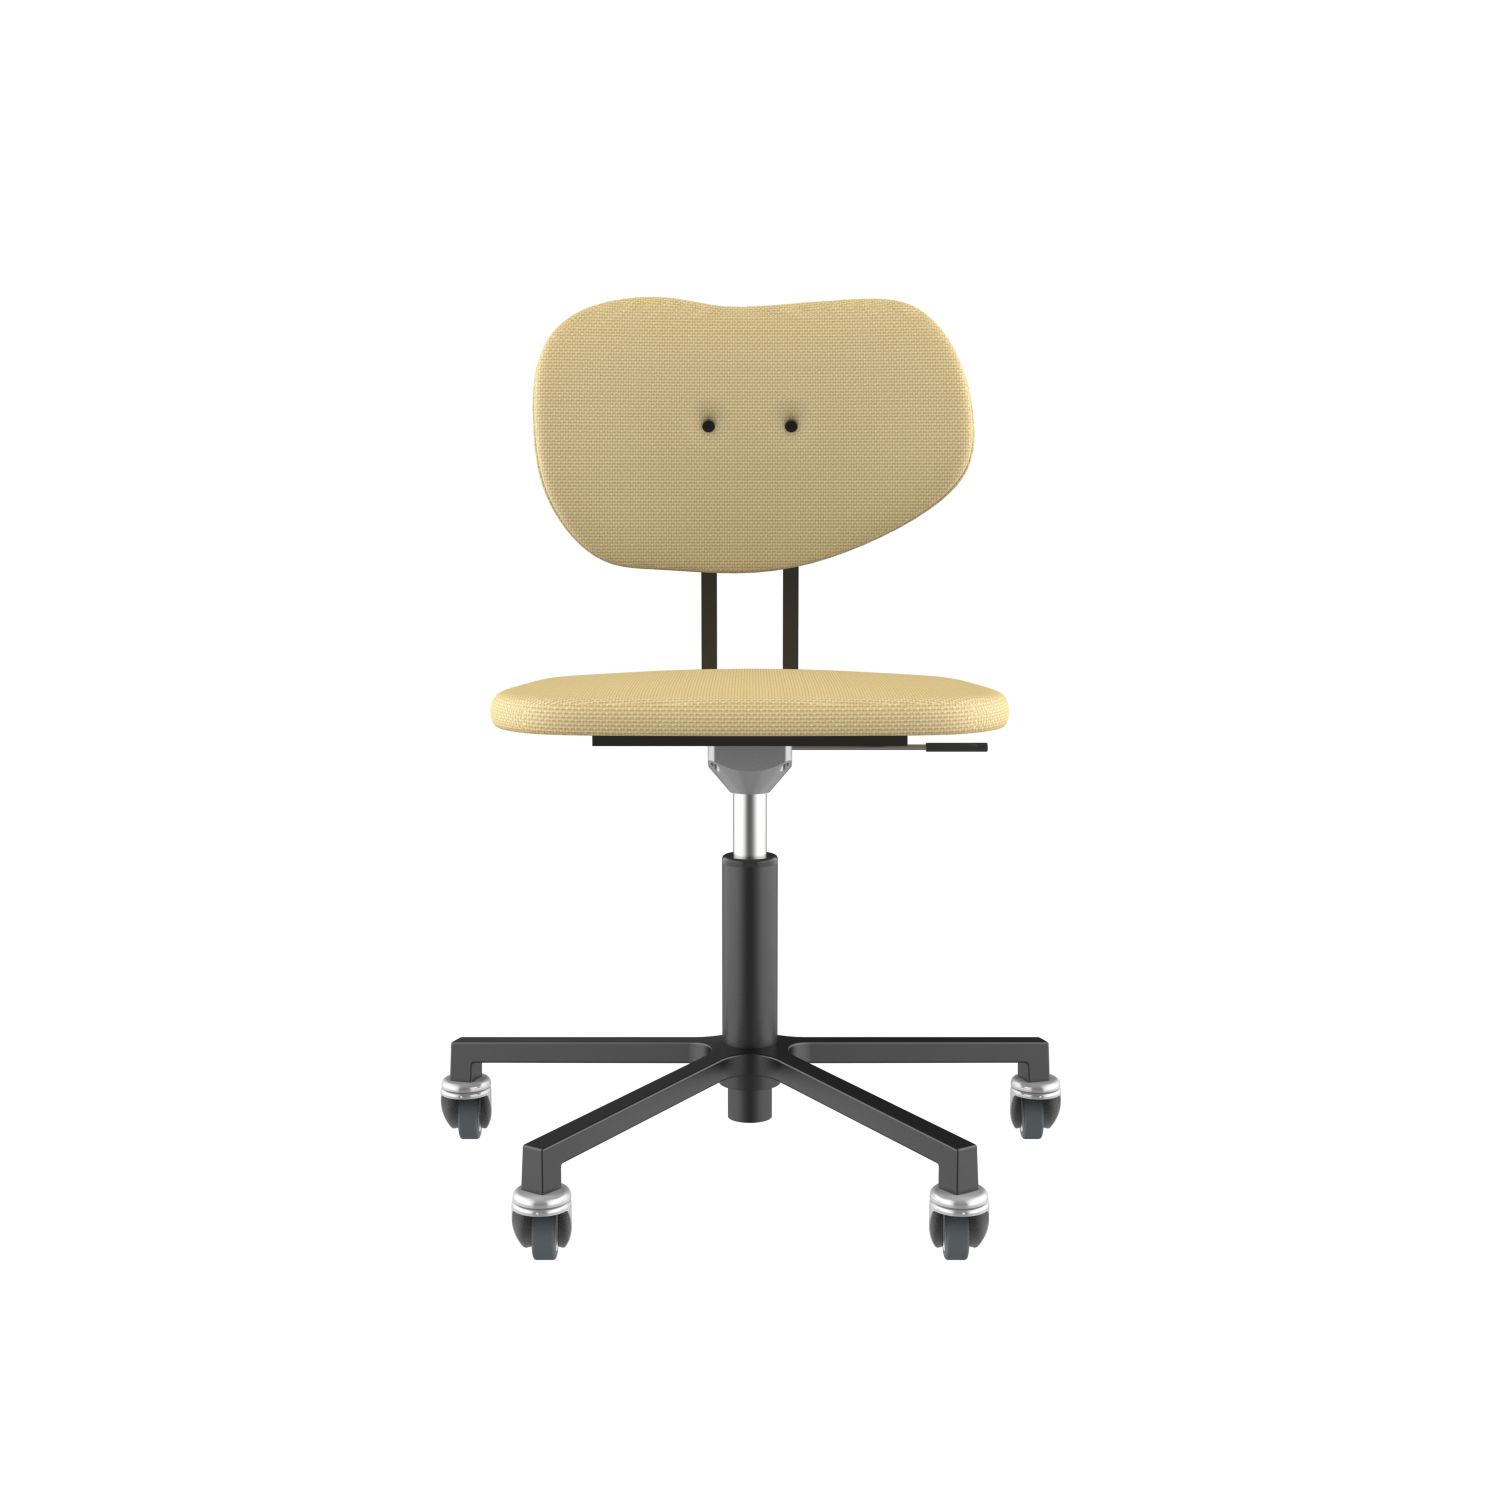 lensvelt maarten baas office chair without armrests backrest b light brown 141 black ral9005 soft wheels